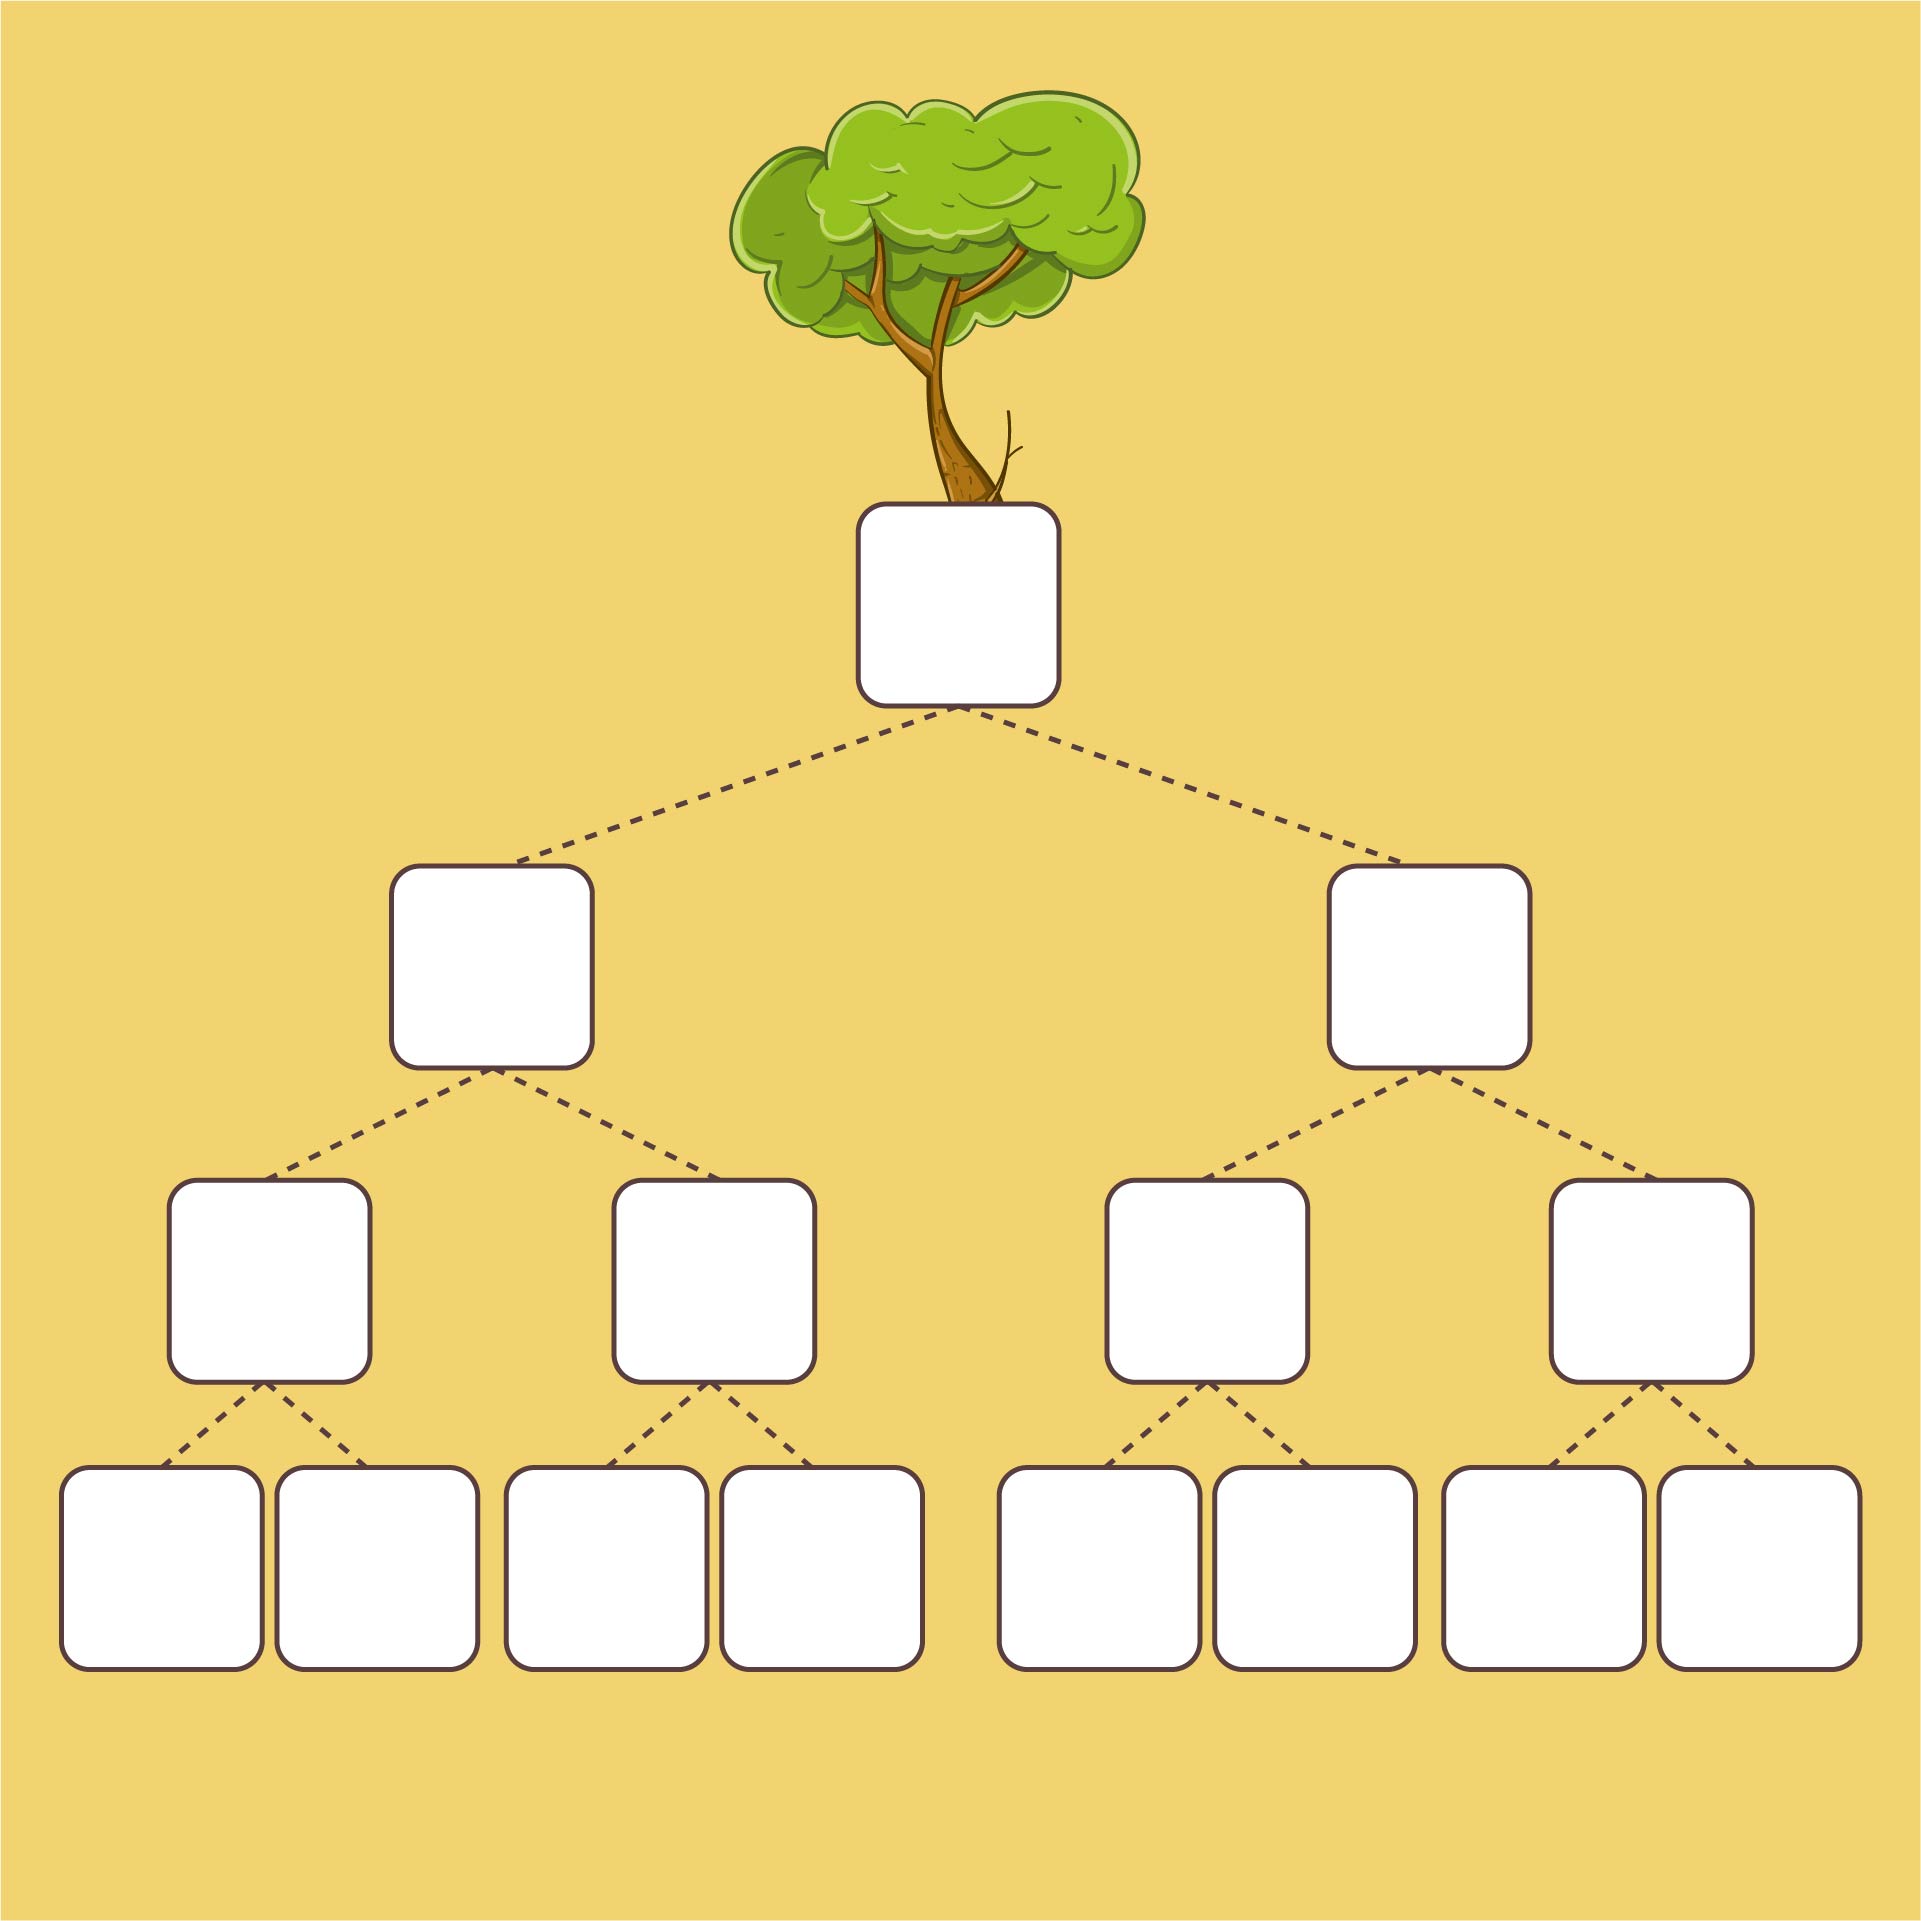 Printable Family Tree Template